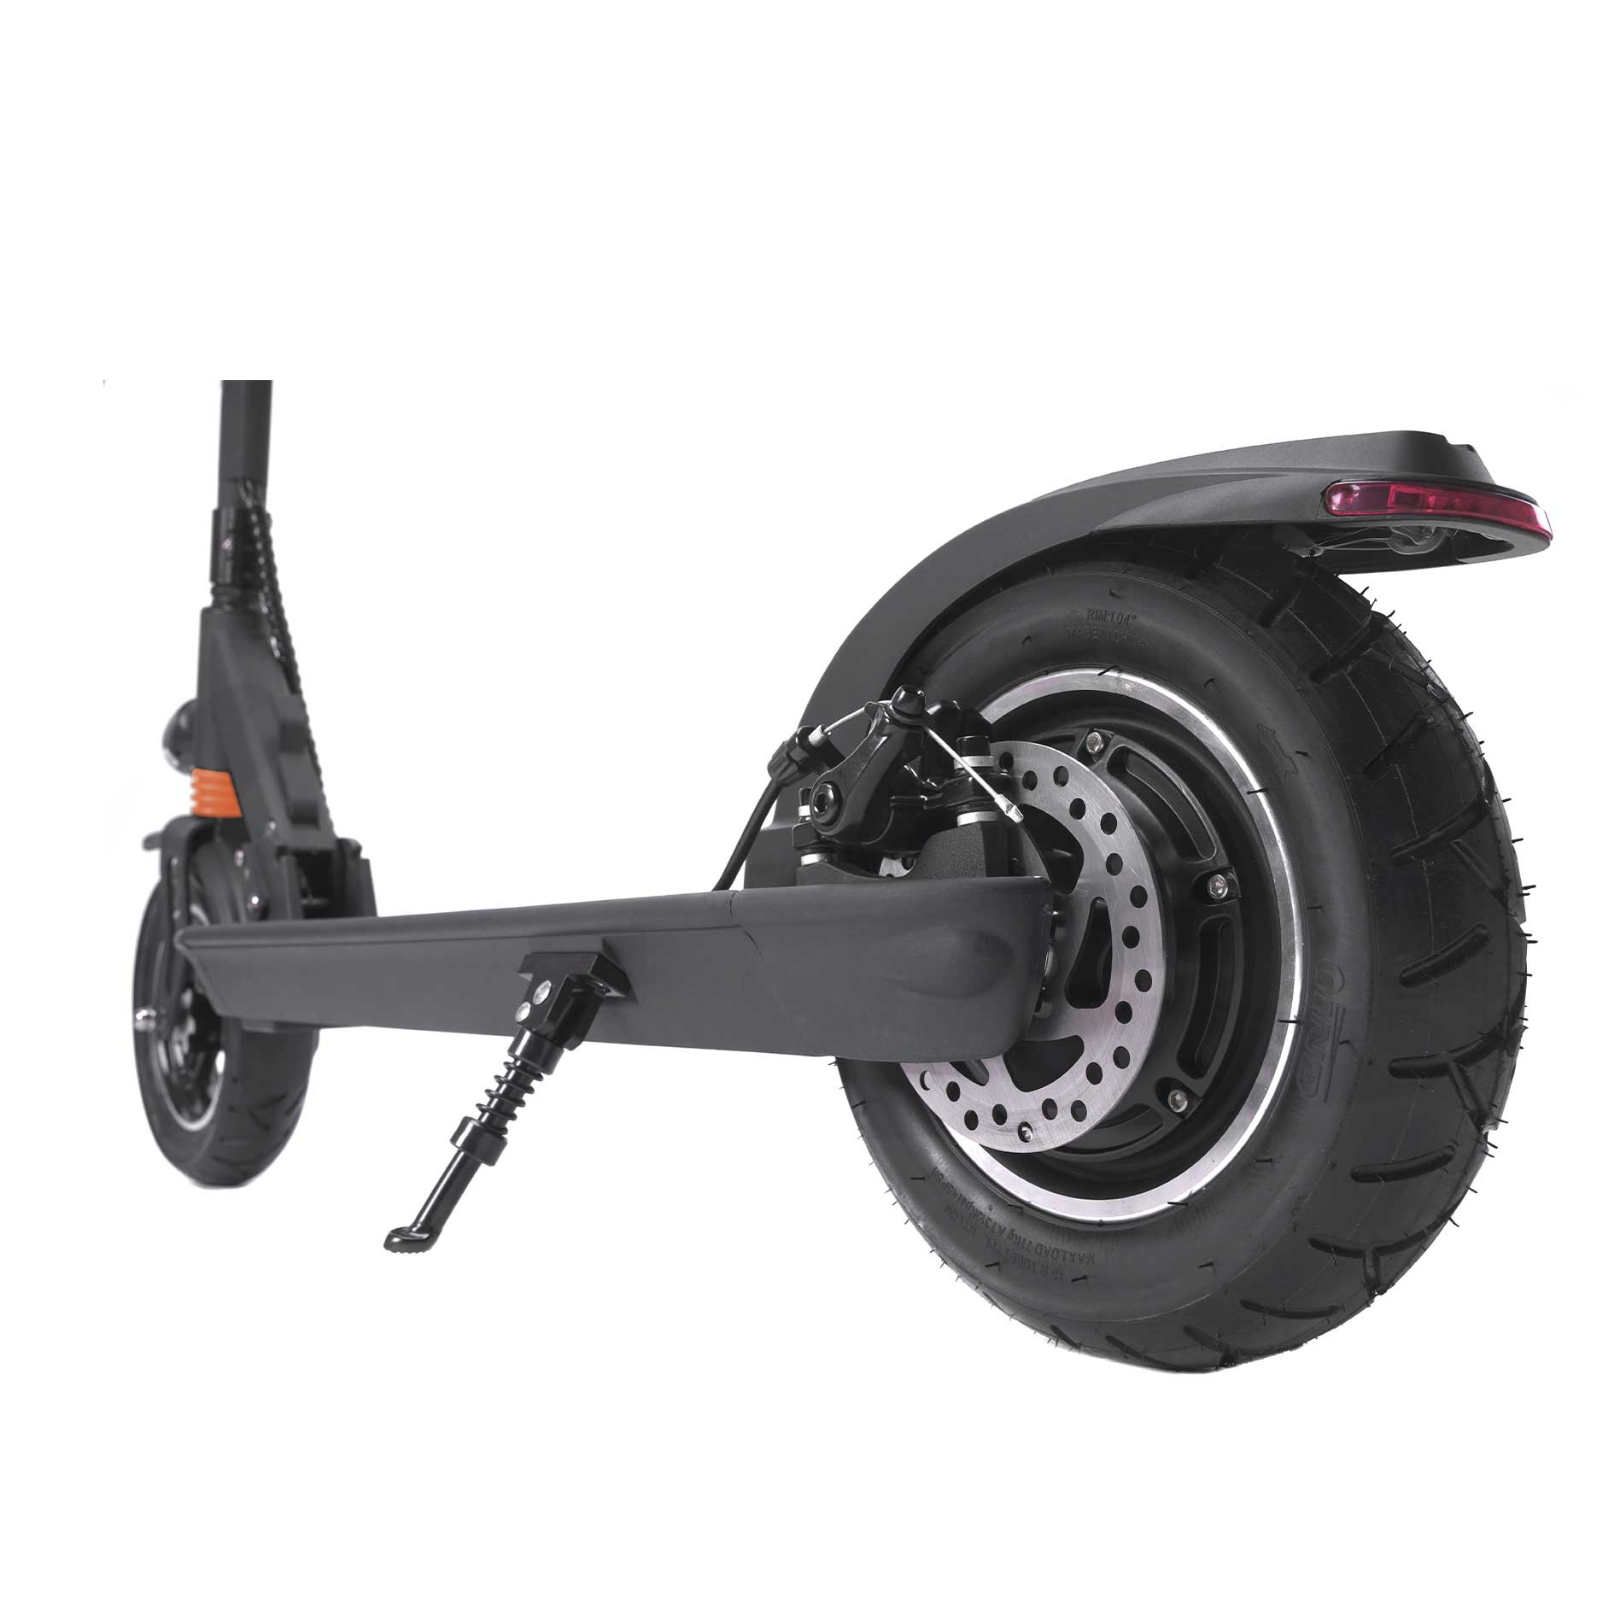 Joyor X1 E-Scooter (Black)